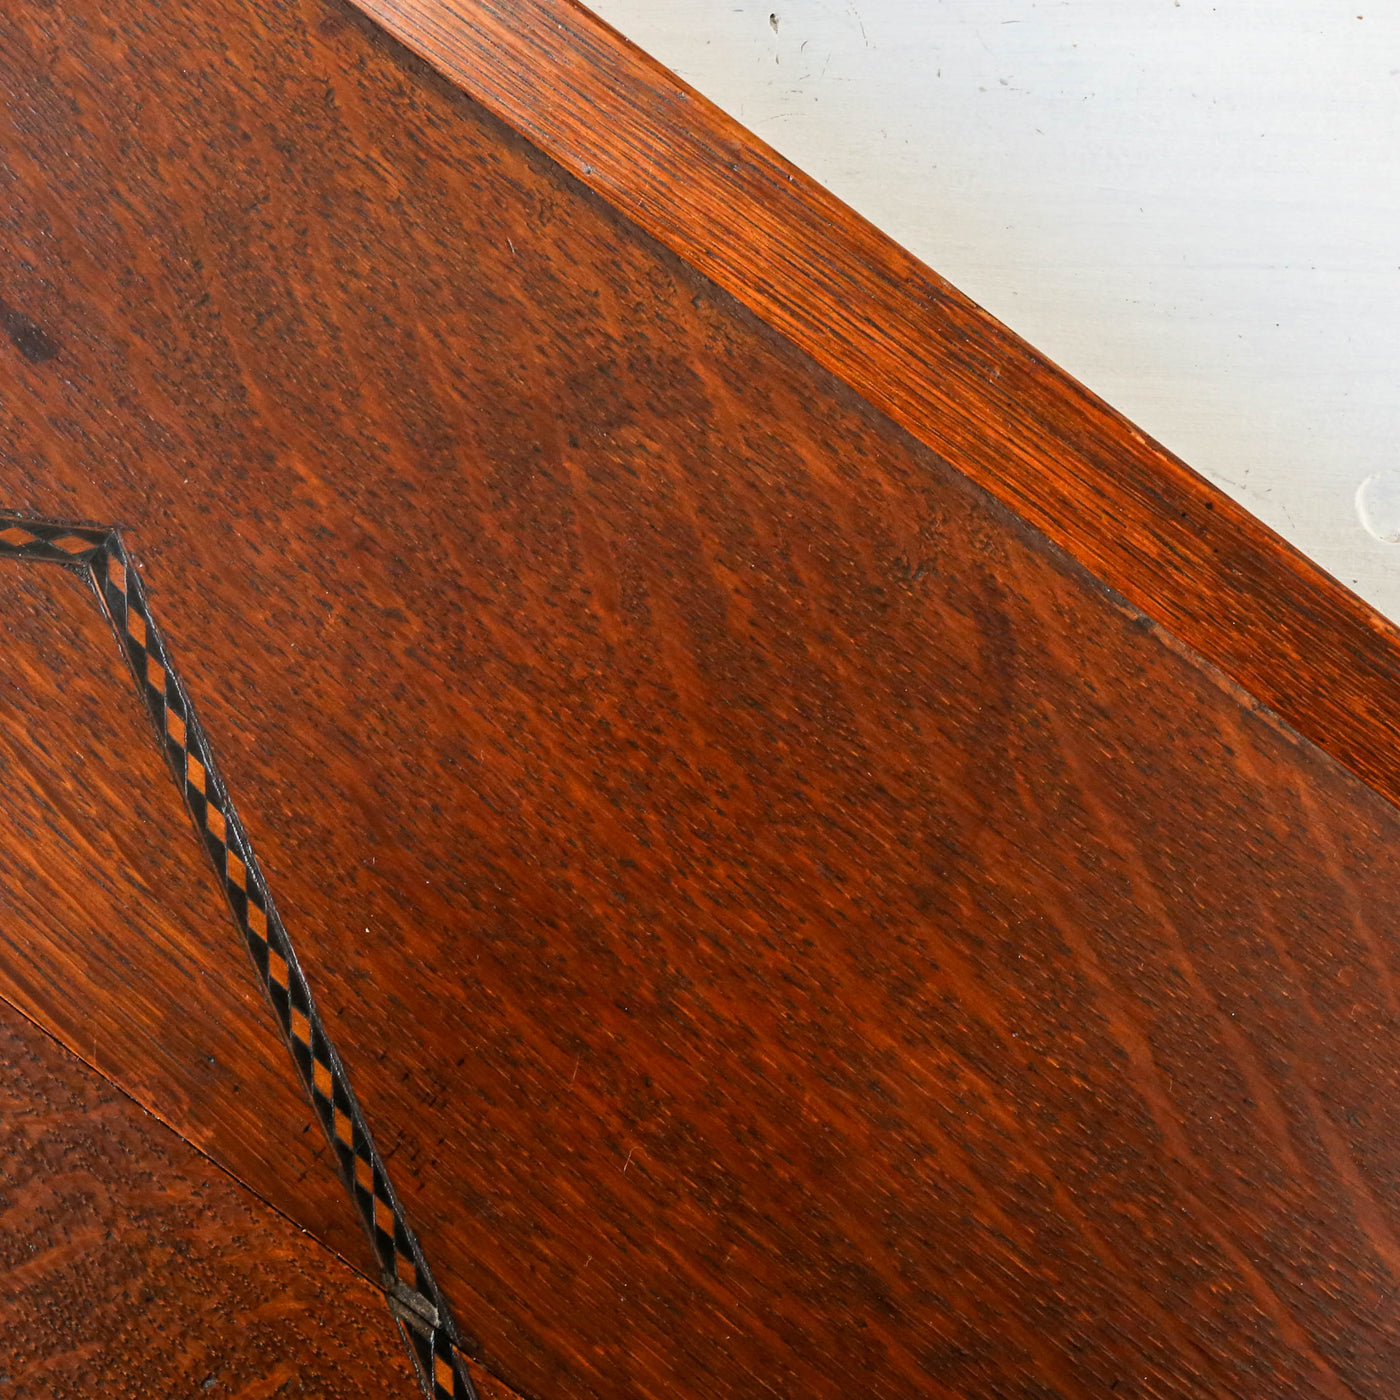 Vintage Handled Tray - Design 4 - Oak inlay